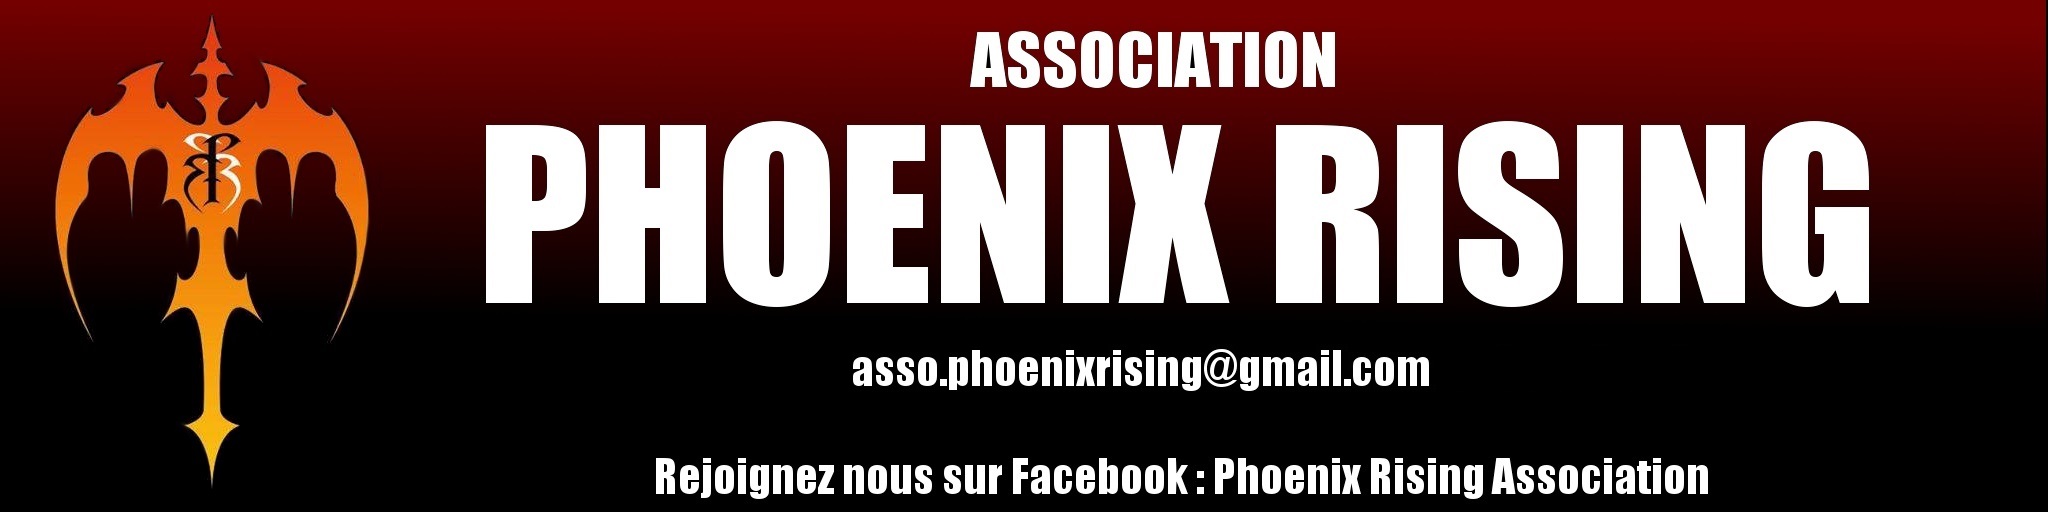 Association Phoenix Rising